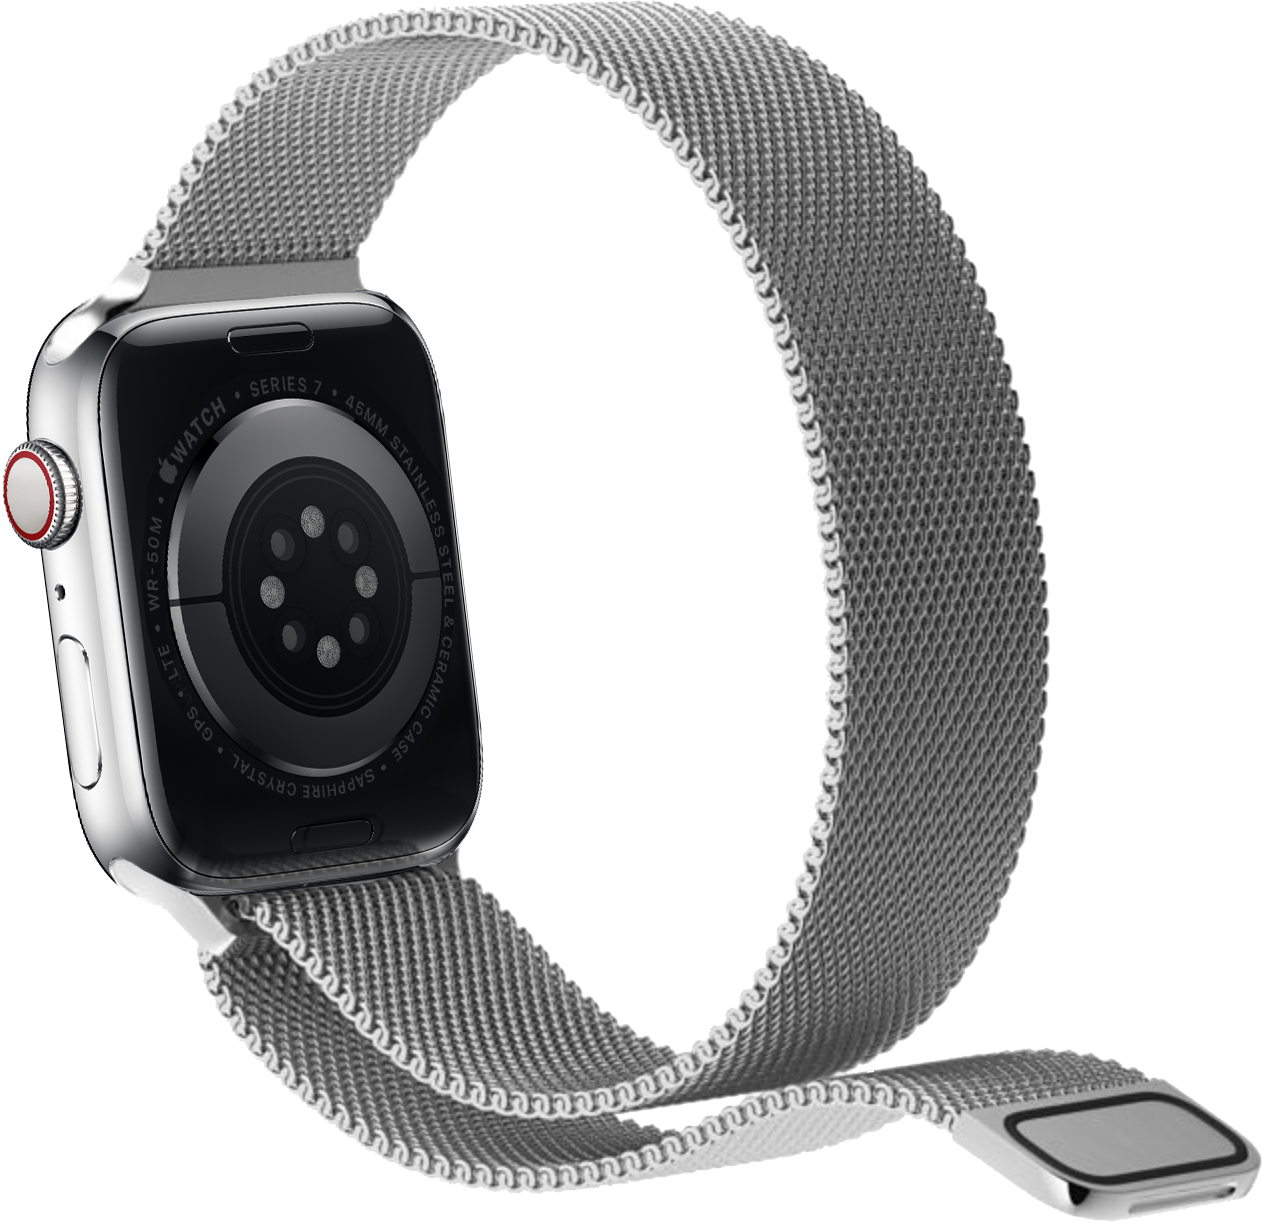 Single Loop Apple Watch Band Online Deals, Save 43 jlcatj.gob.mx